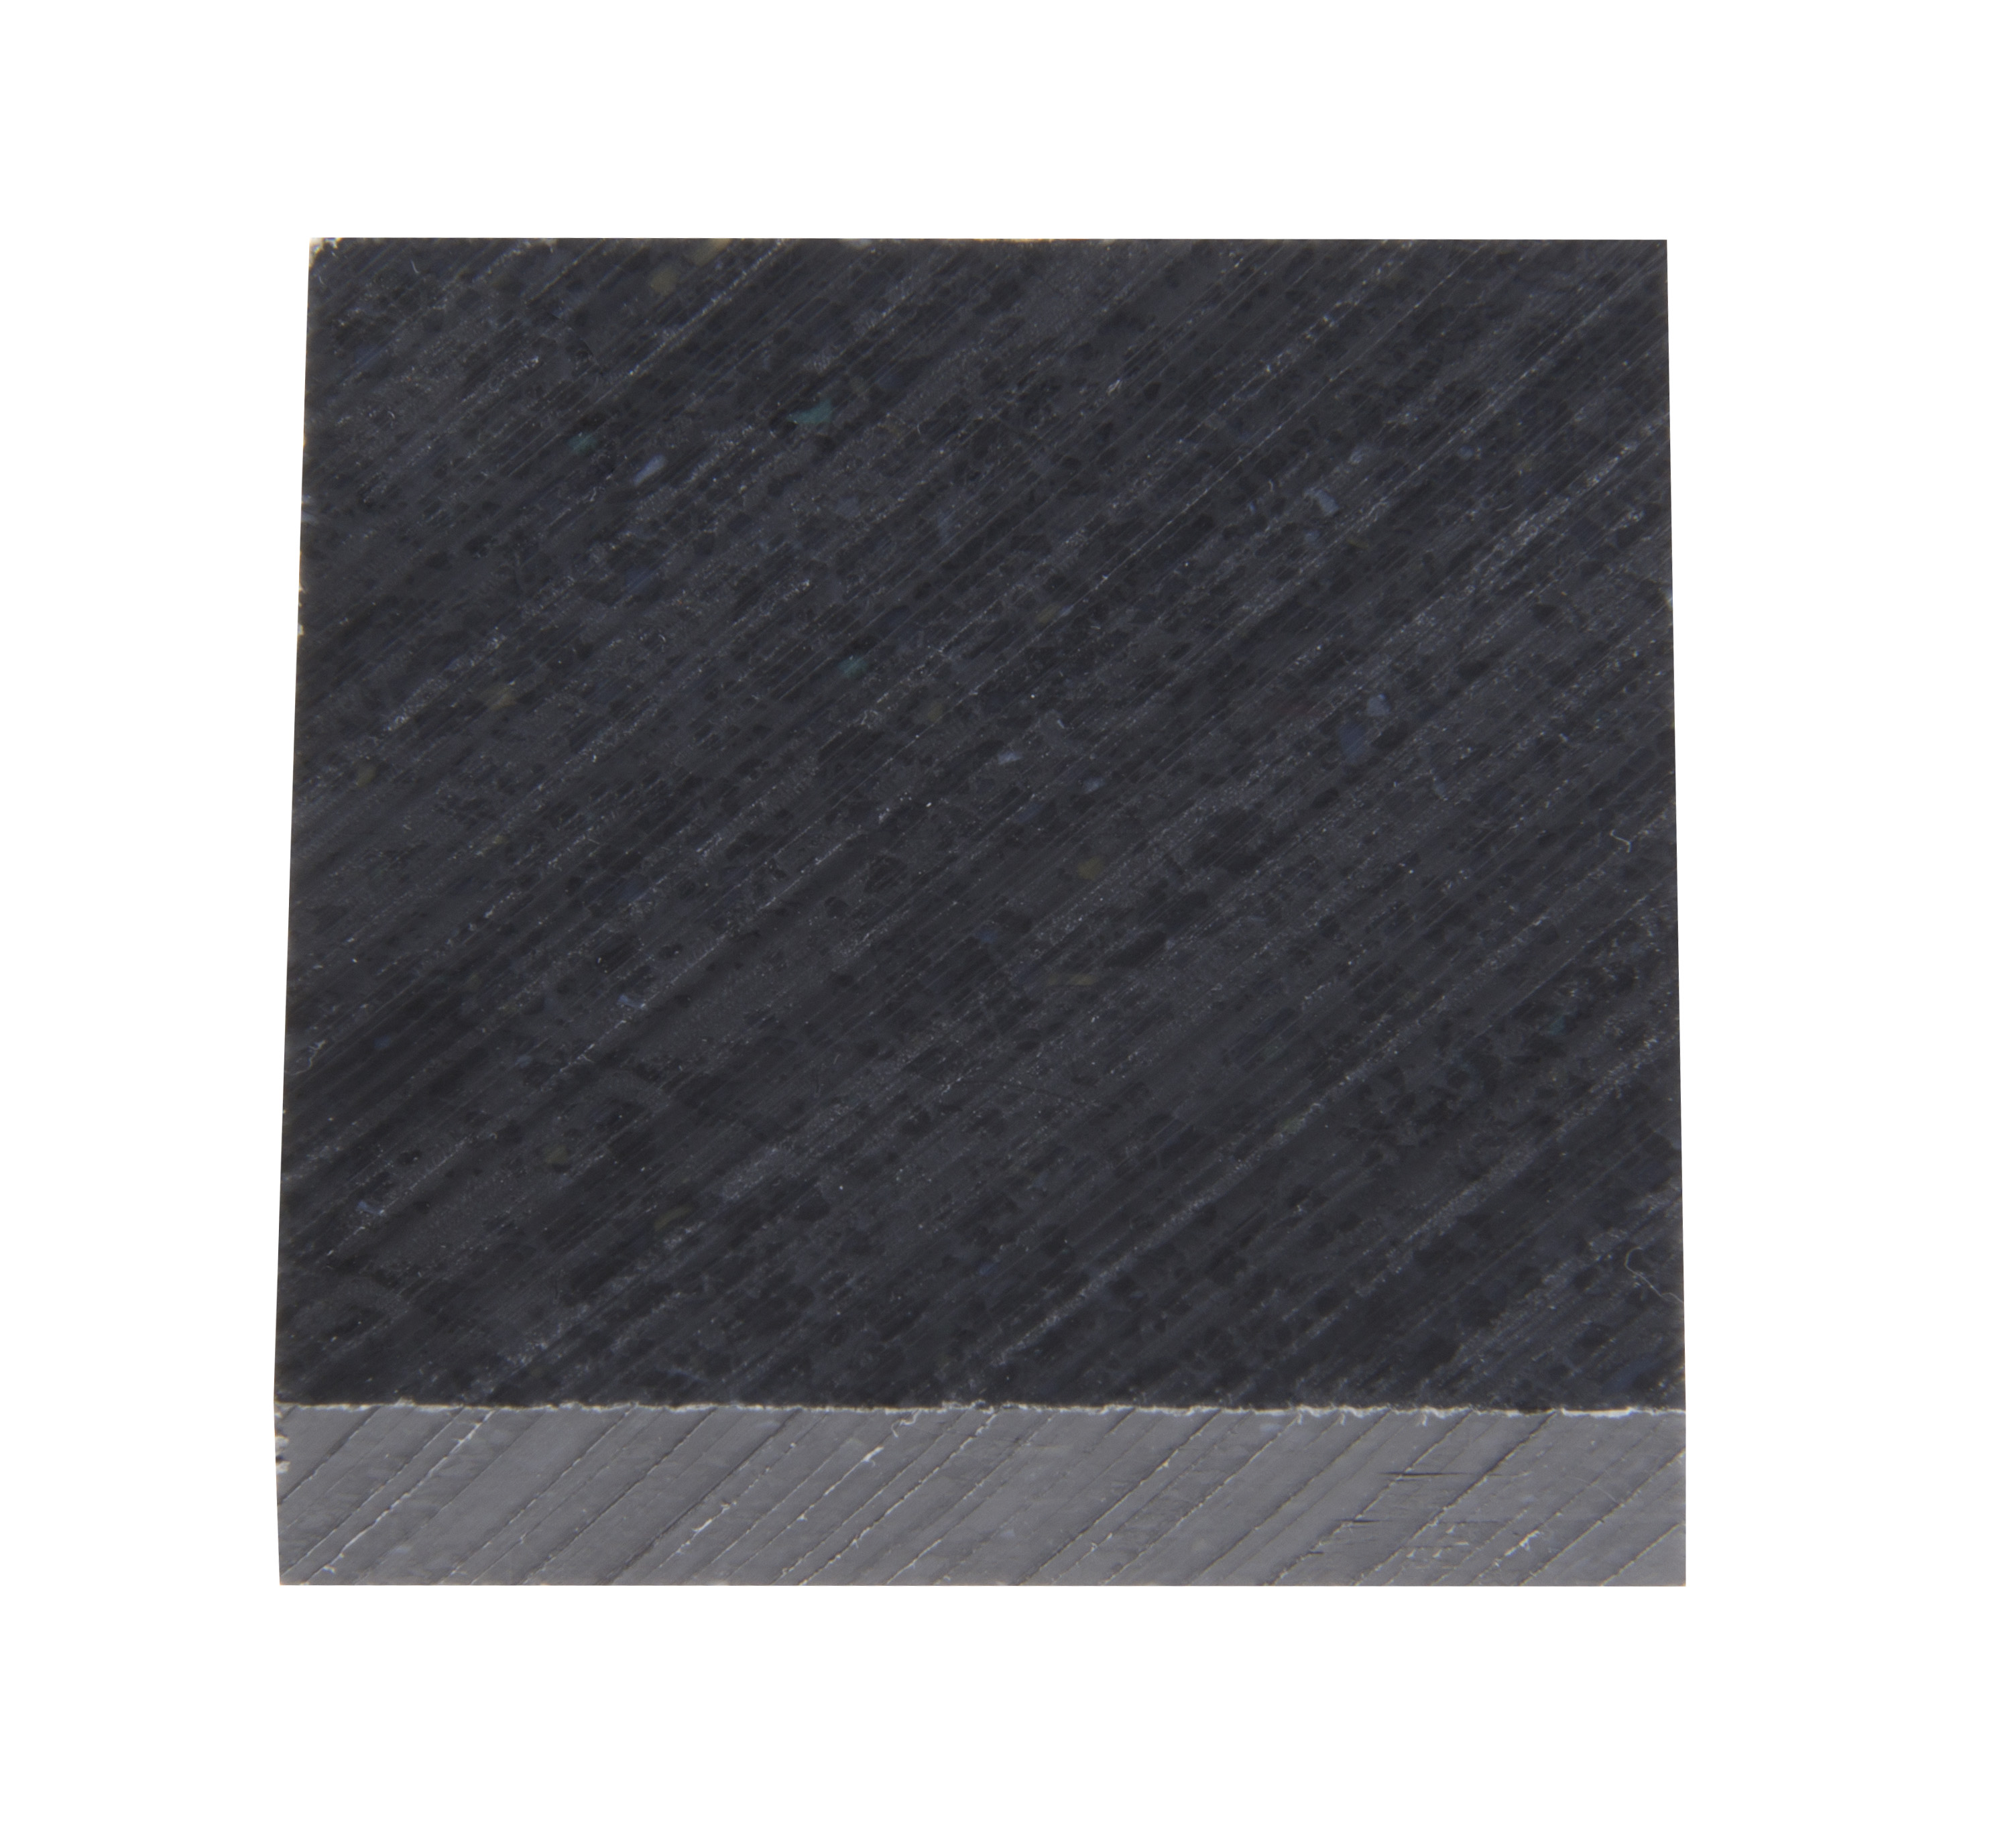 Black Reprocessed UHMW Plate 1/4" x 24" x 47-1/2"